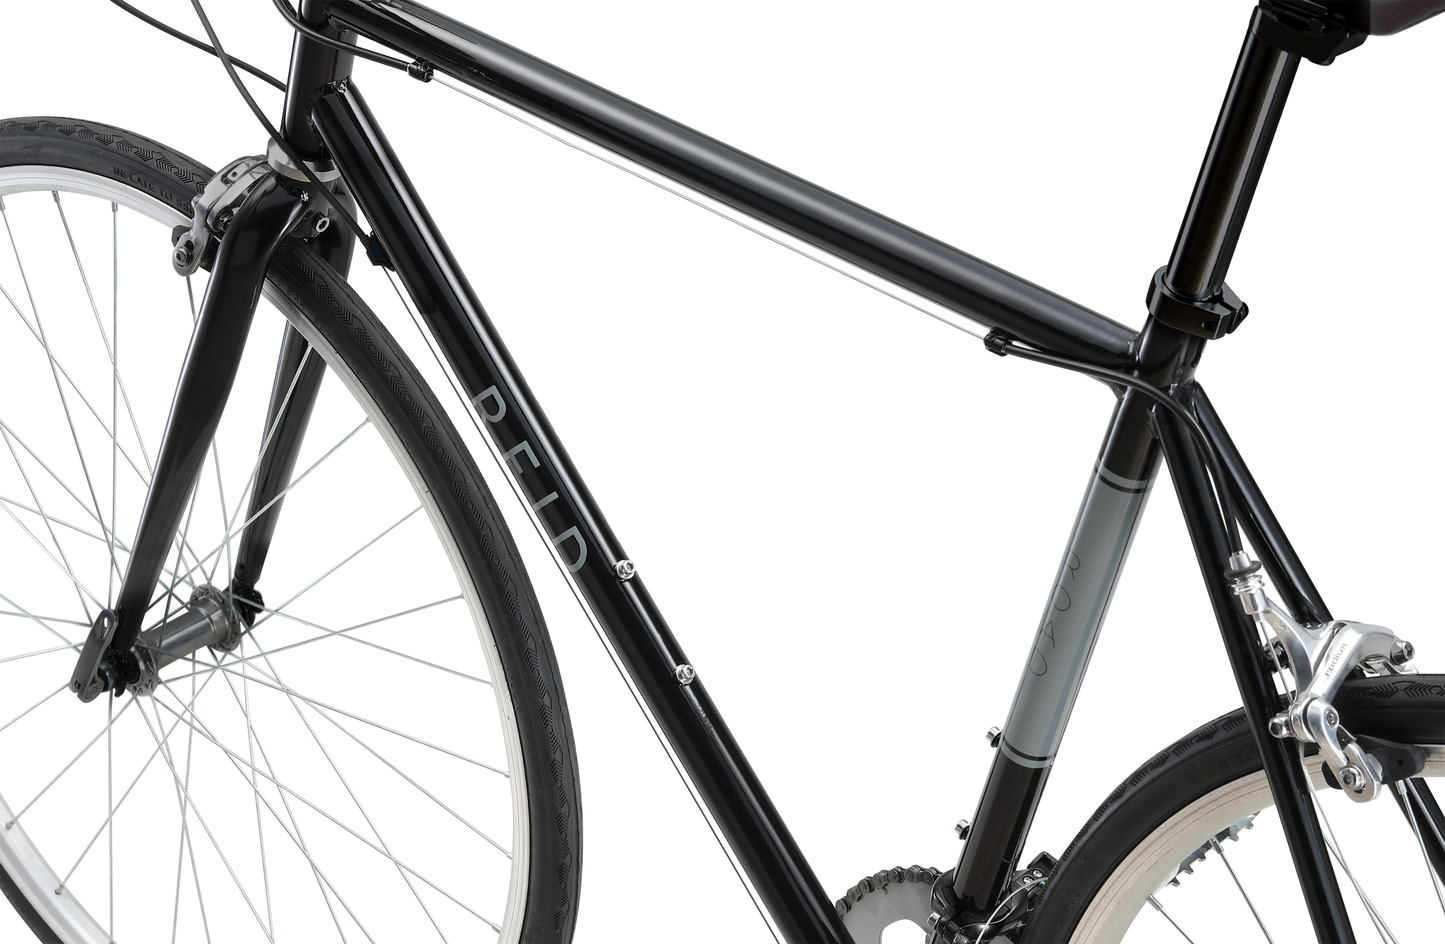 Original Road Road Bike in Black showing road bike frame geometry from Reid Cycles Australia